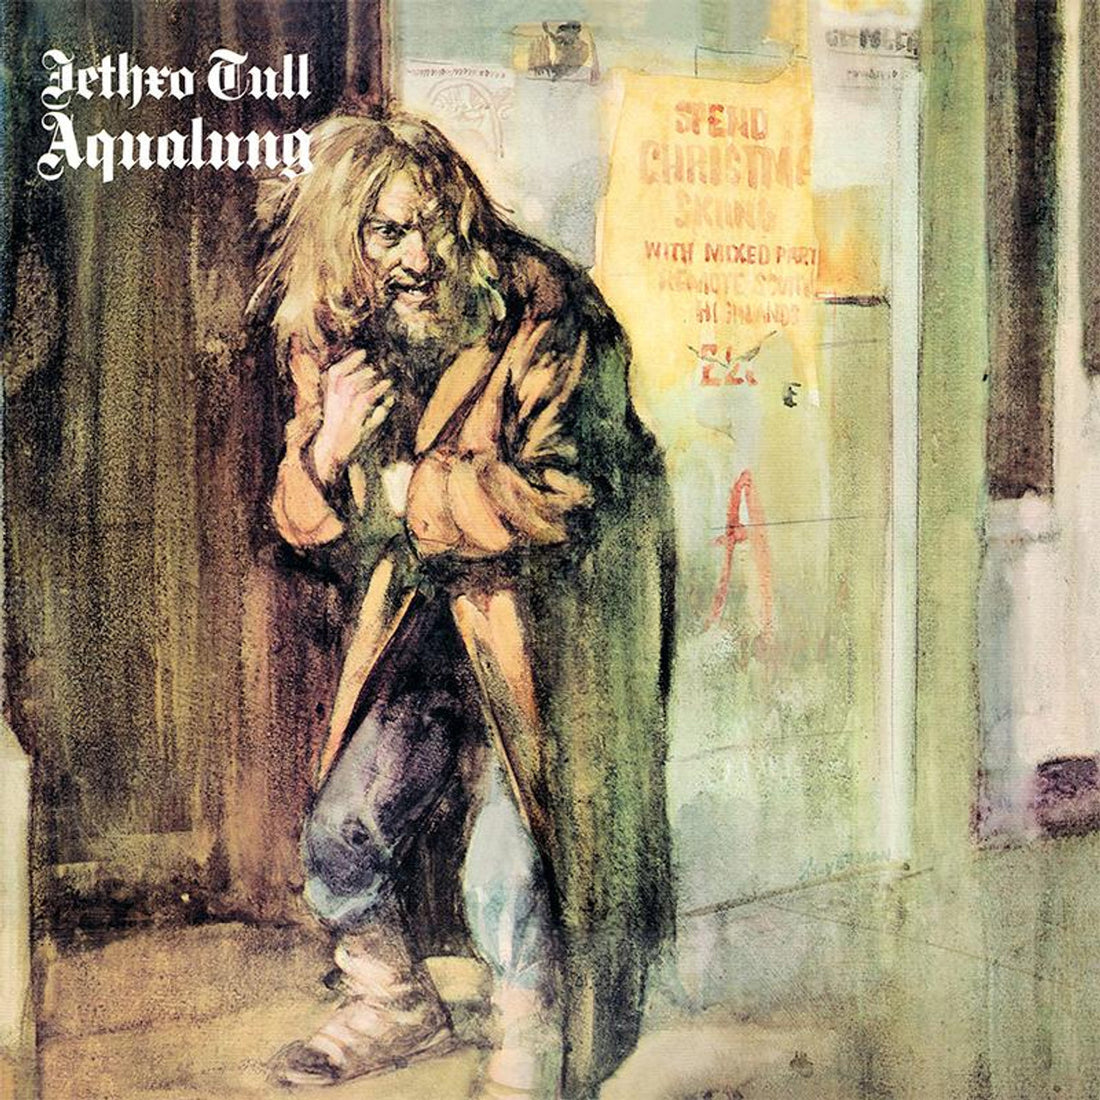 Jethro Tull | Aqualung [SACD]